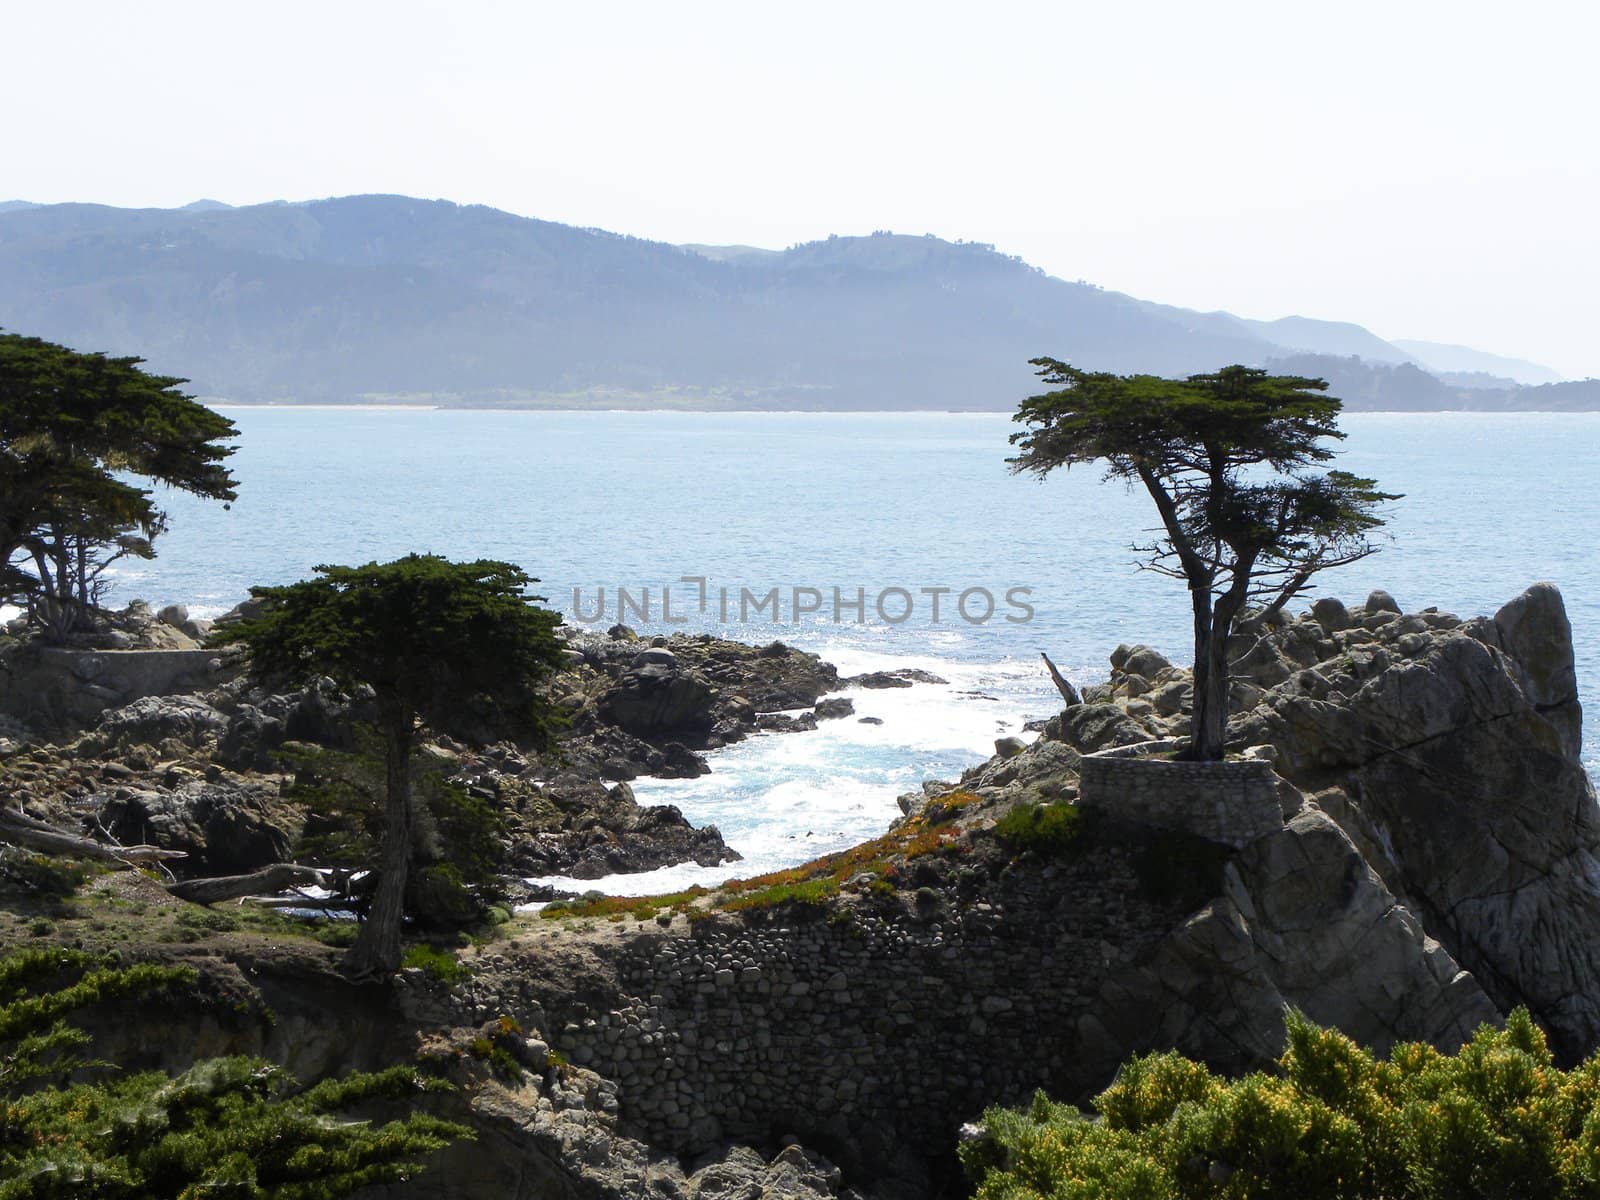 Cyprus tree on rock along coastline.